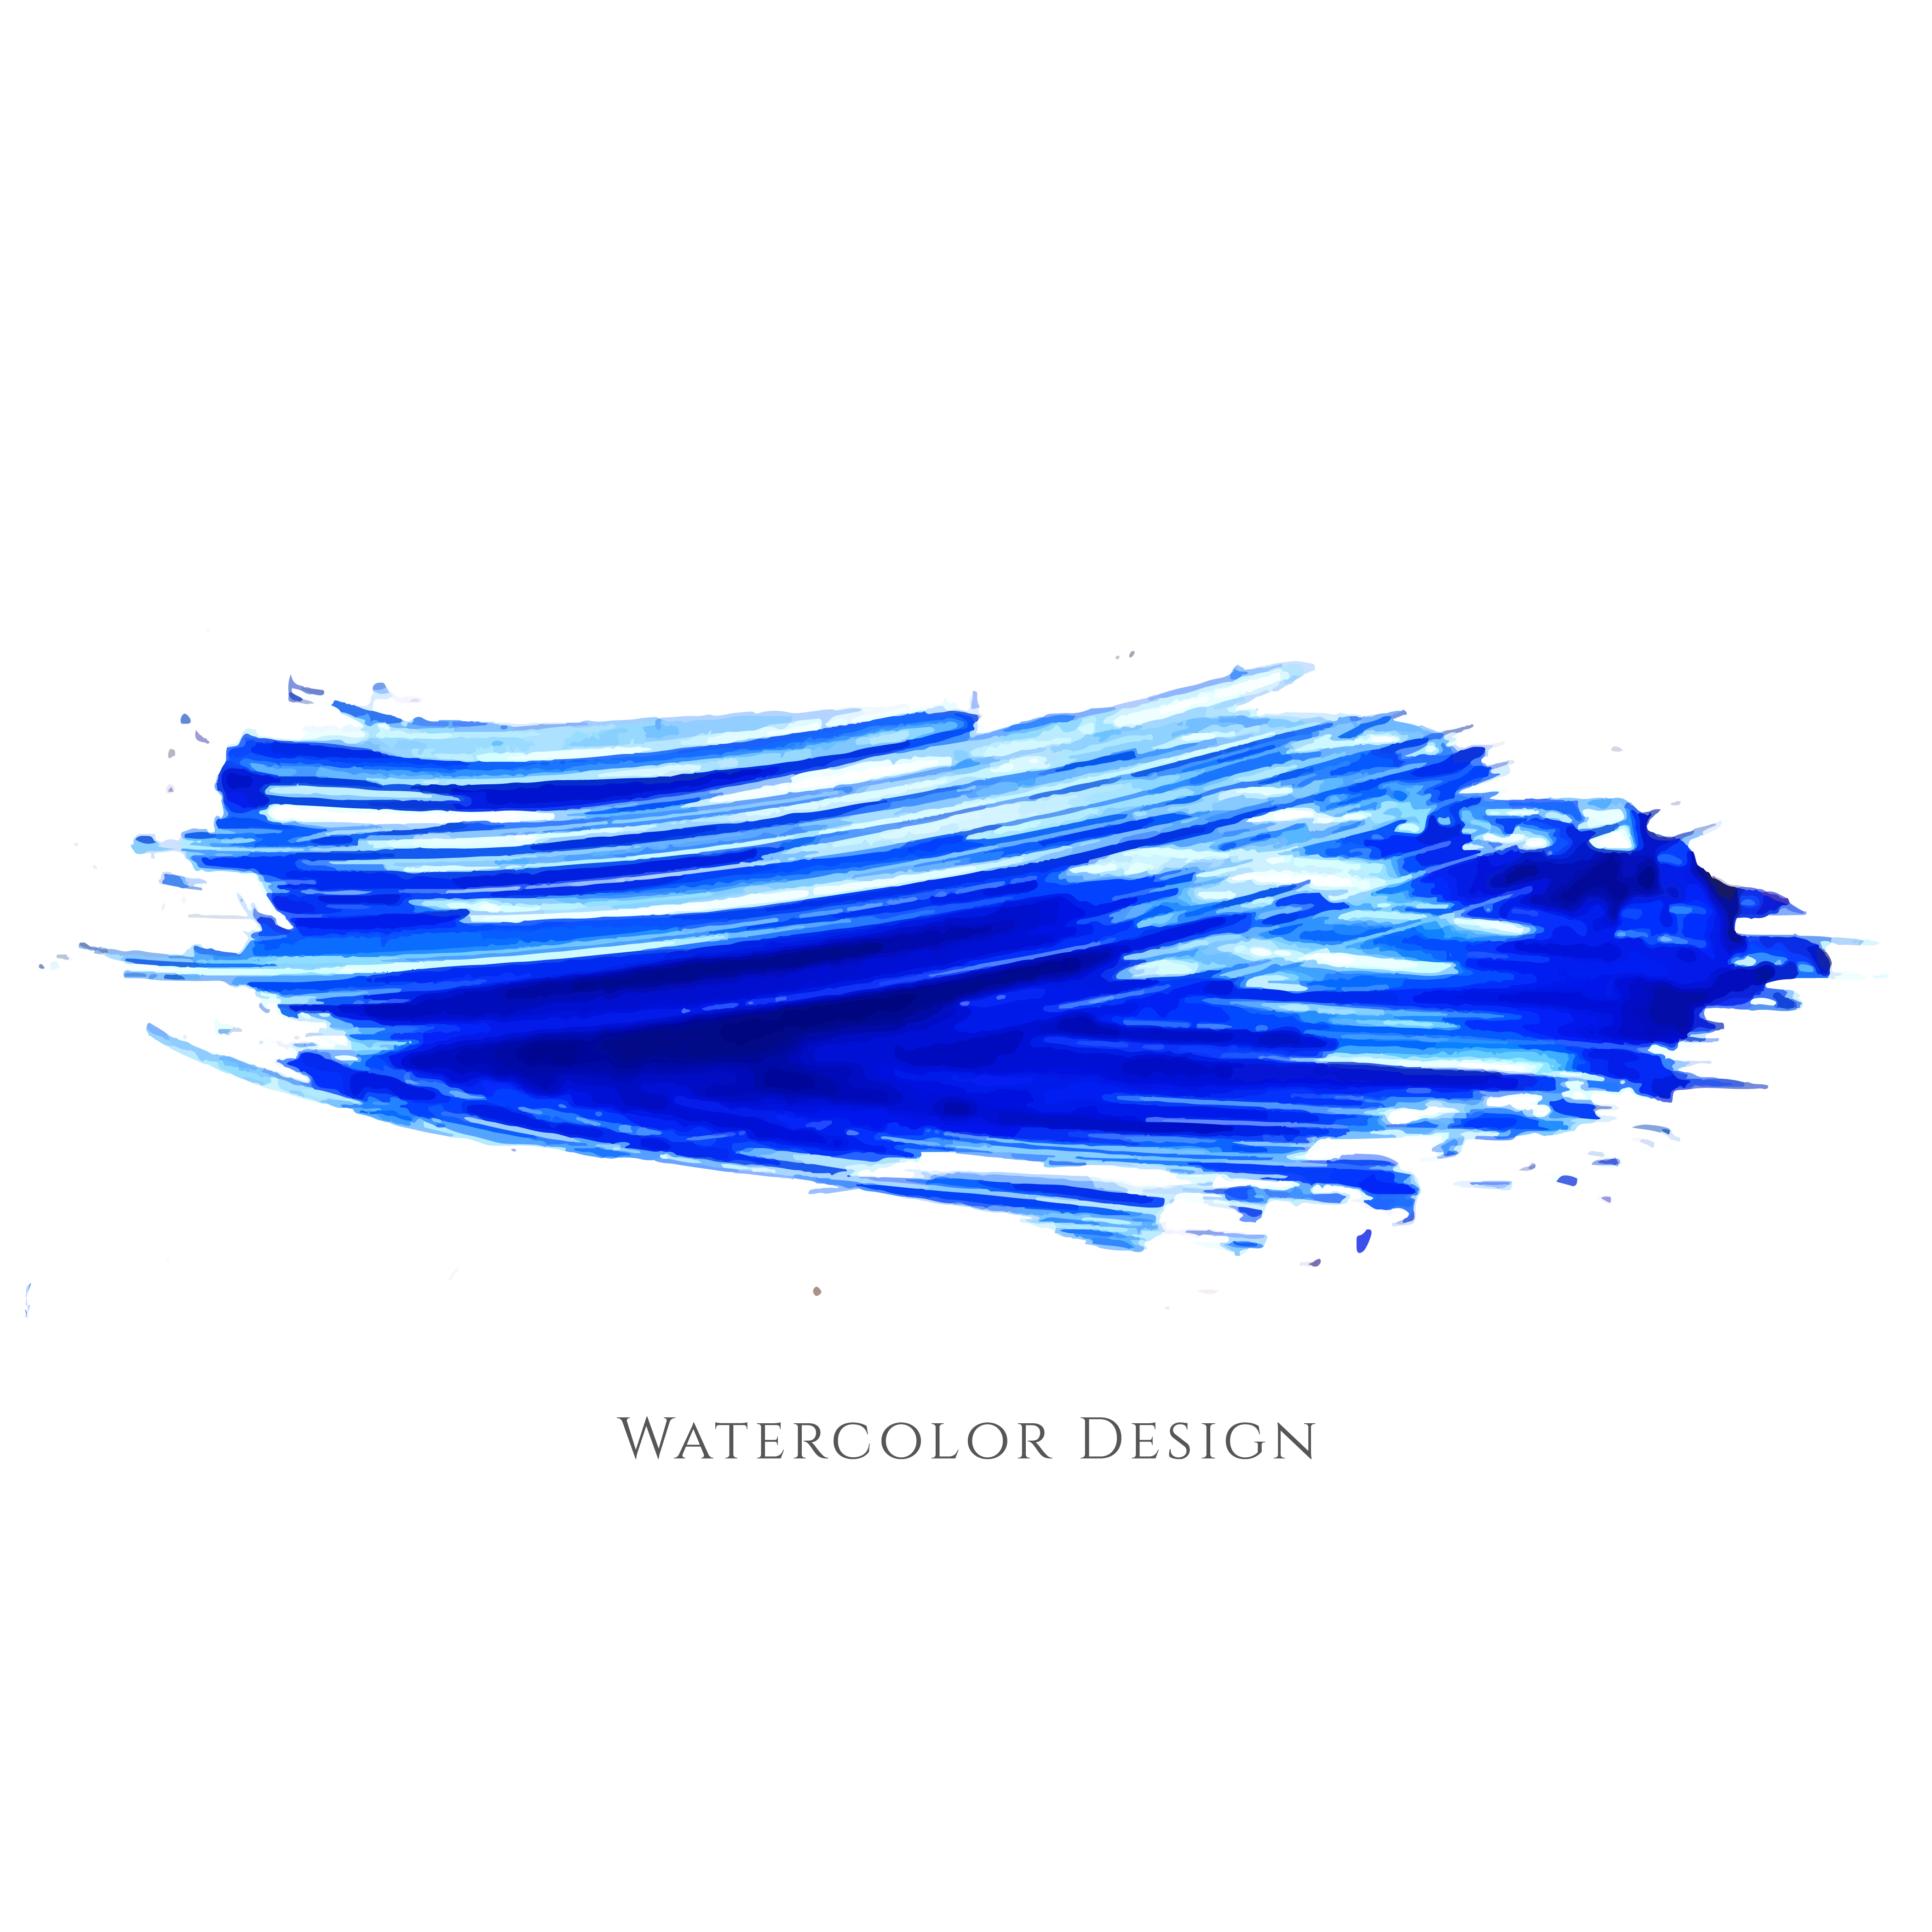 Download Abstract blue watercolor strokes design - Download Free Vectors, Clipart Graphics & Vector Art